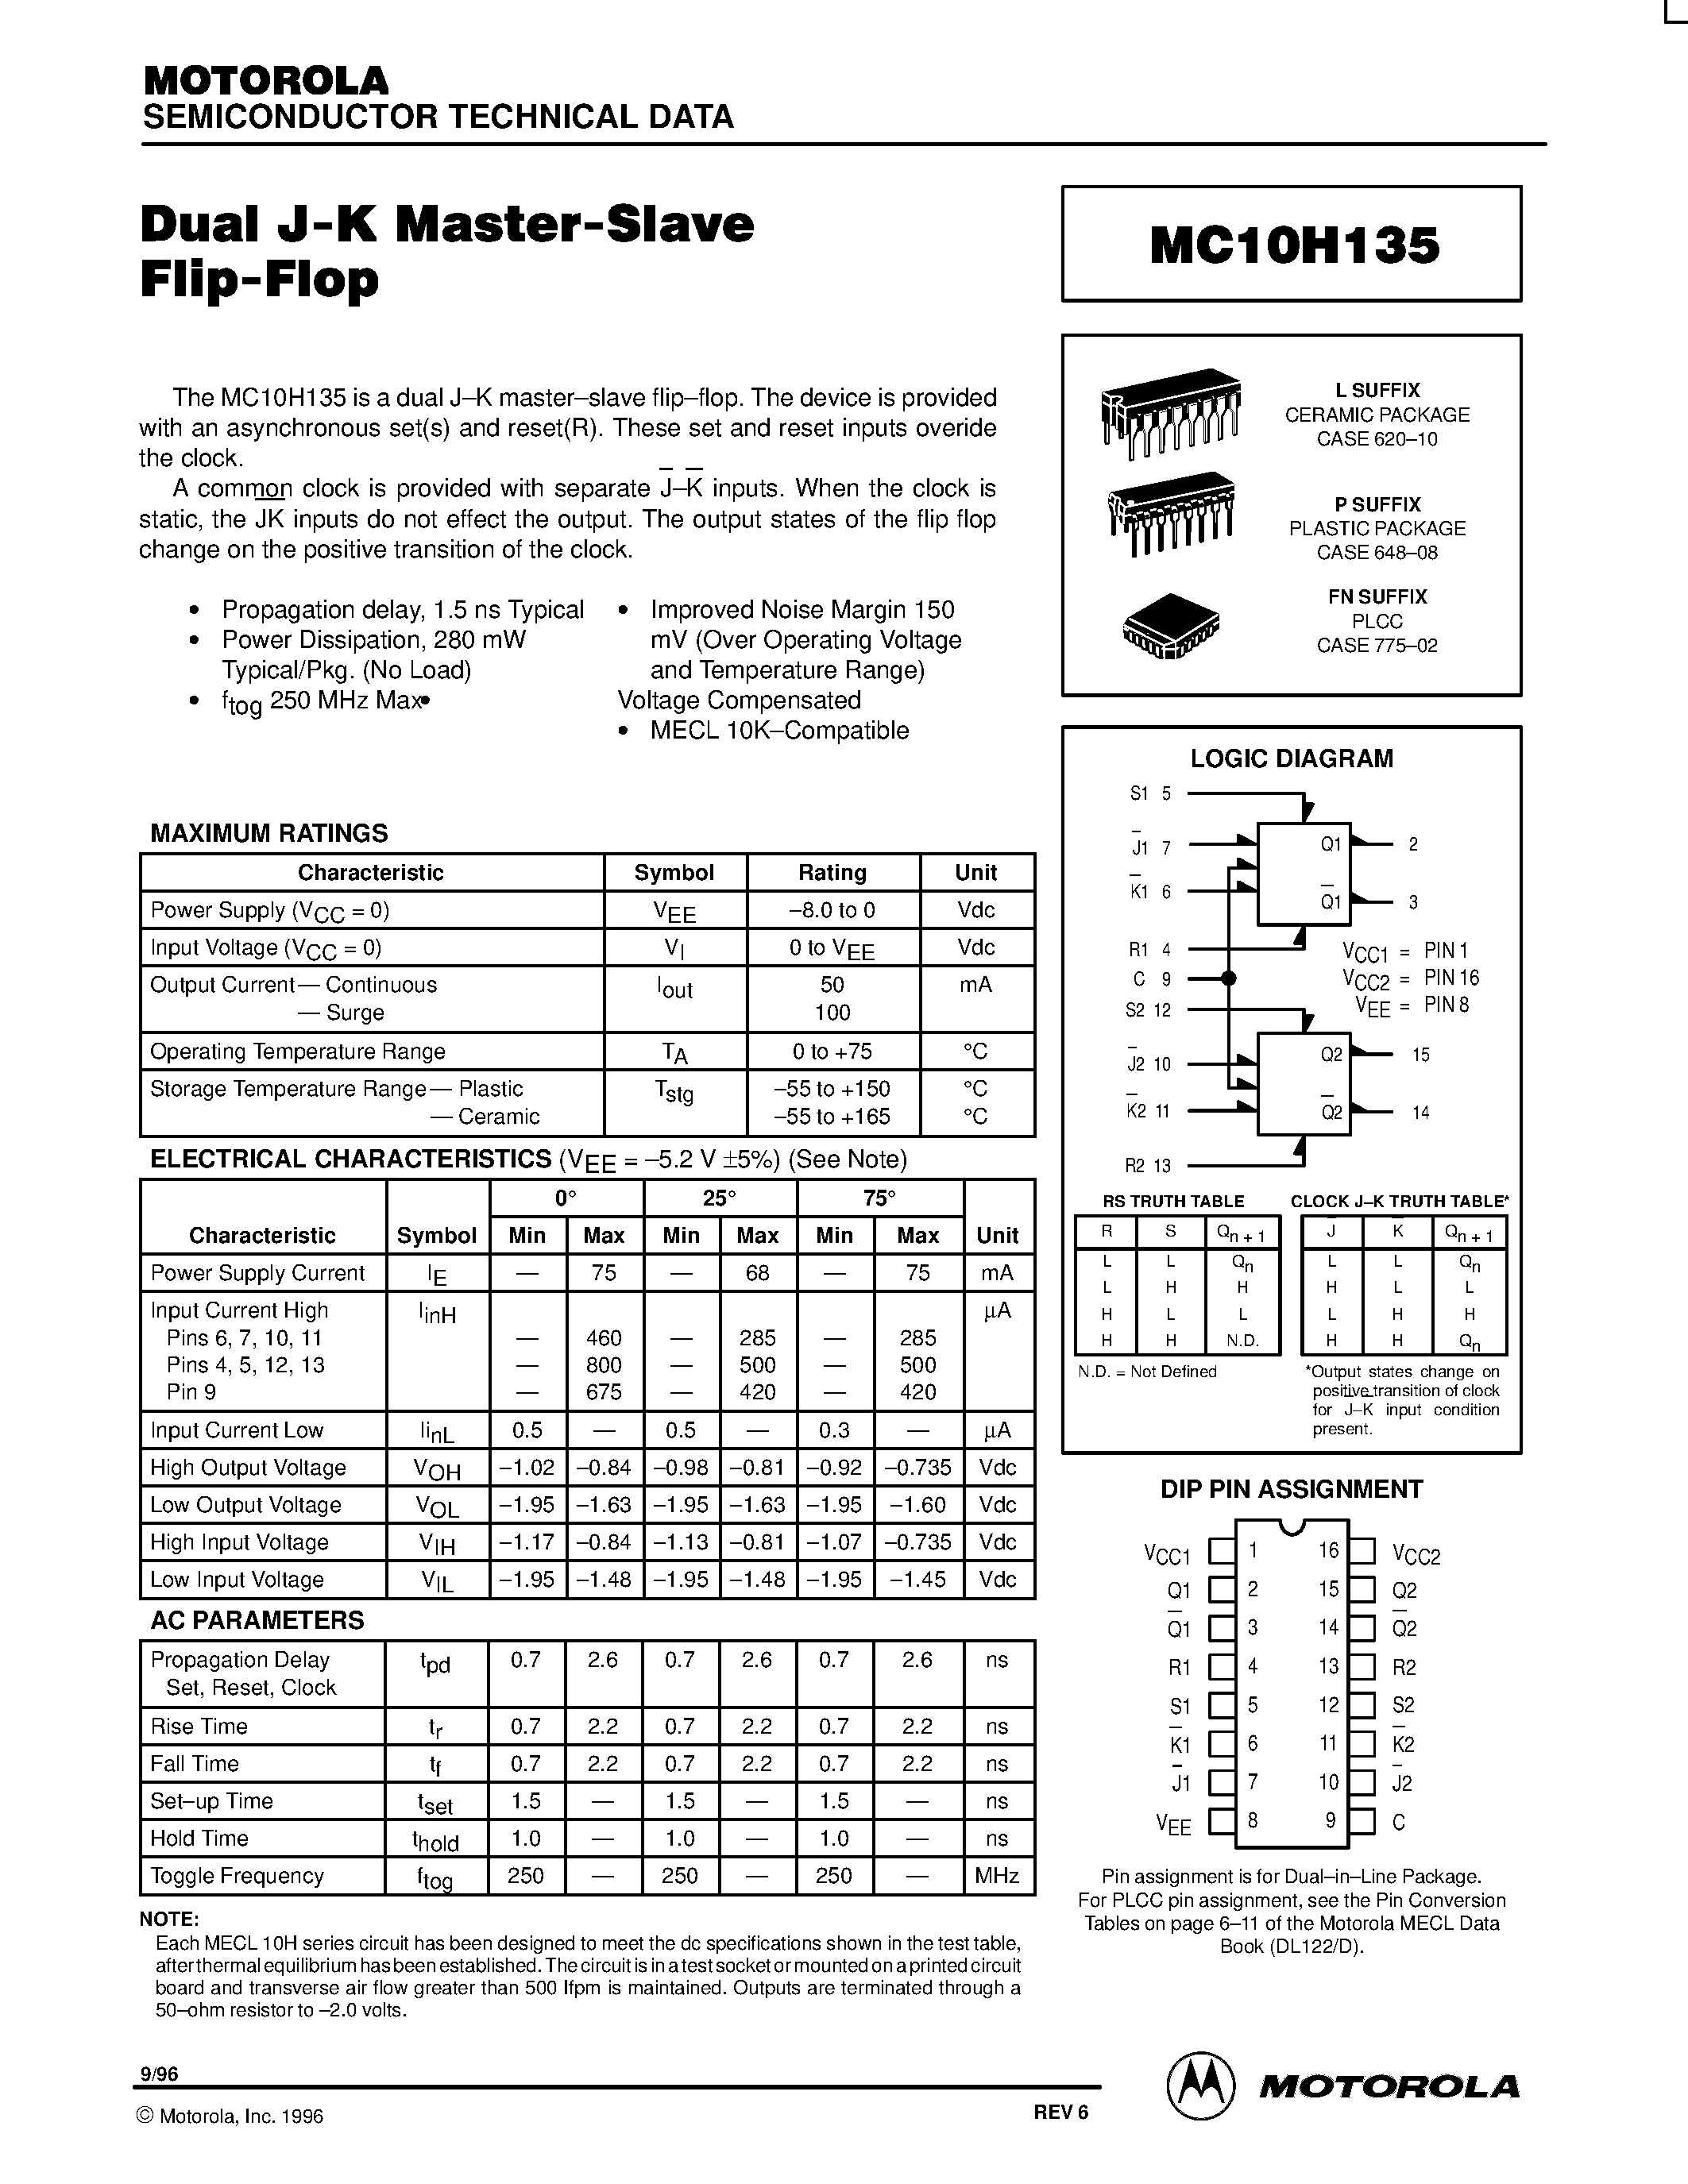 Datasheet MC10H135L - Dual J-K Master-Slave Flip-Flop page 1